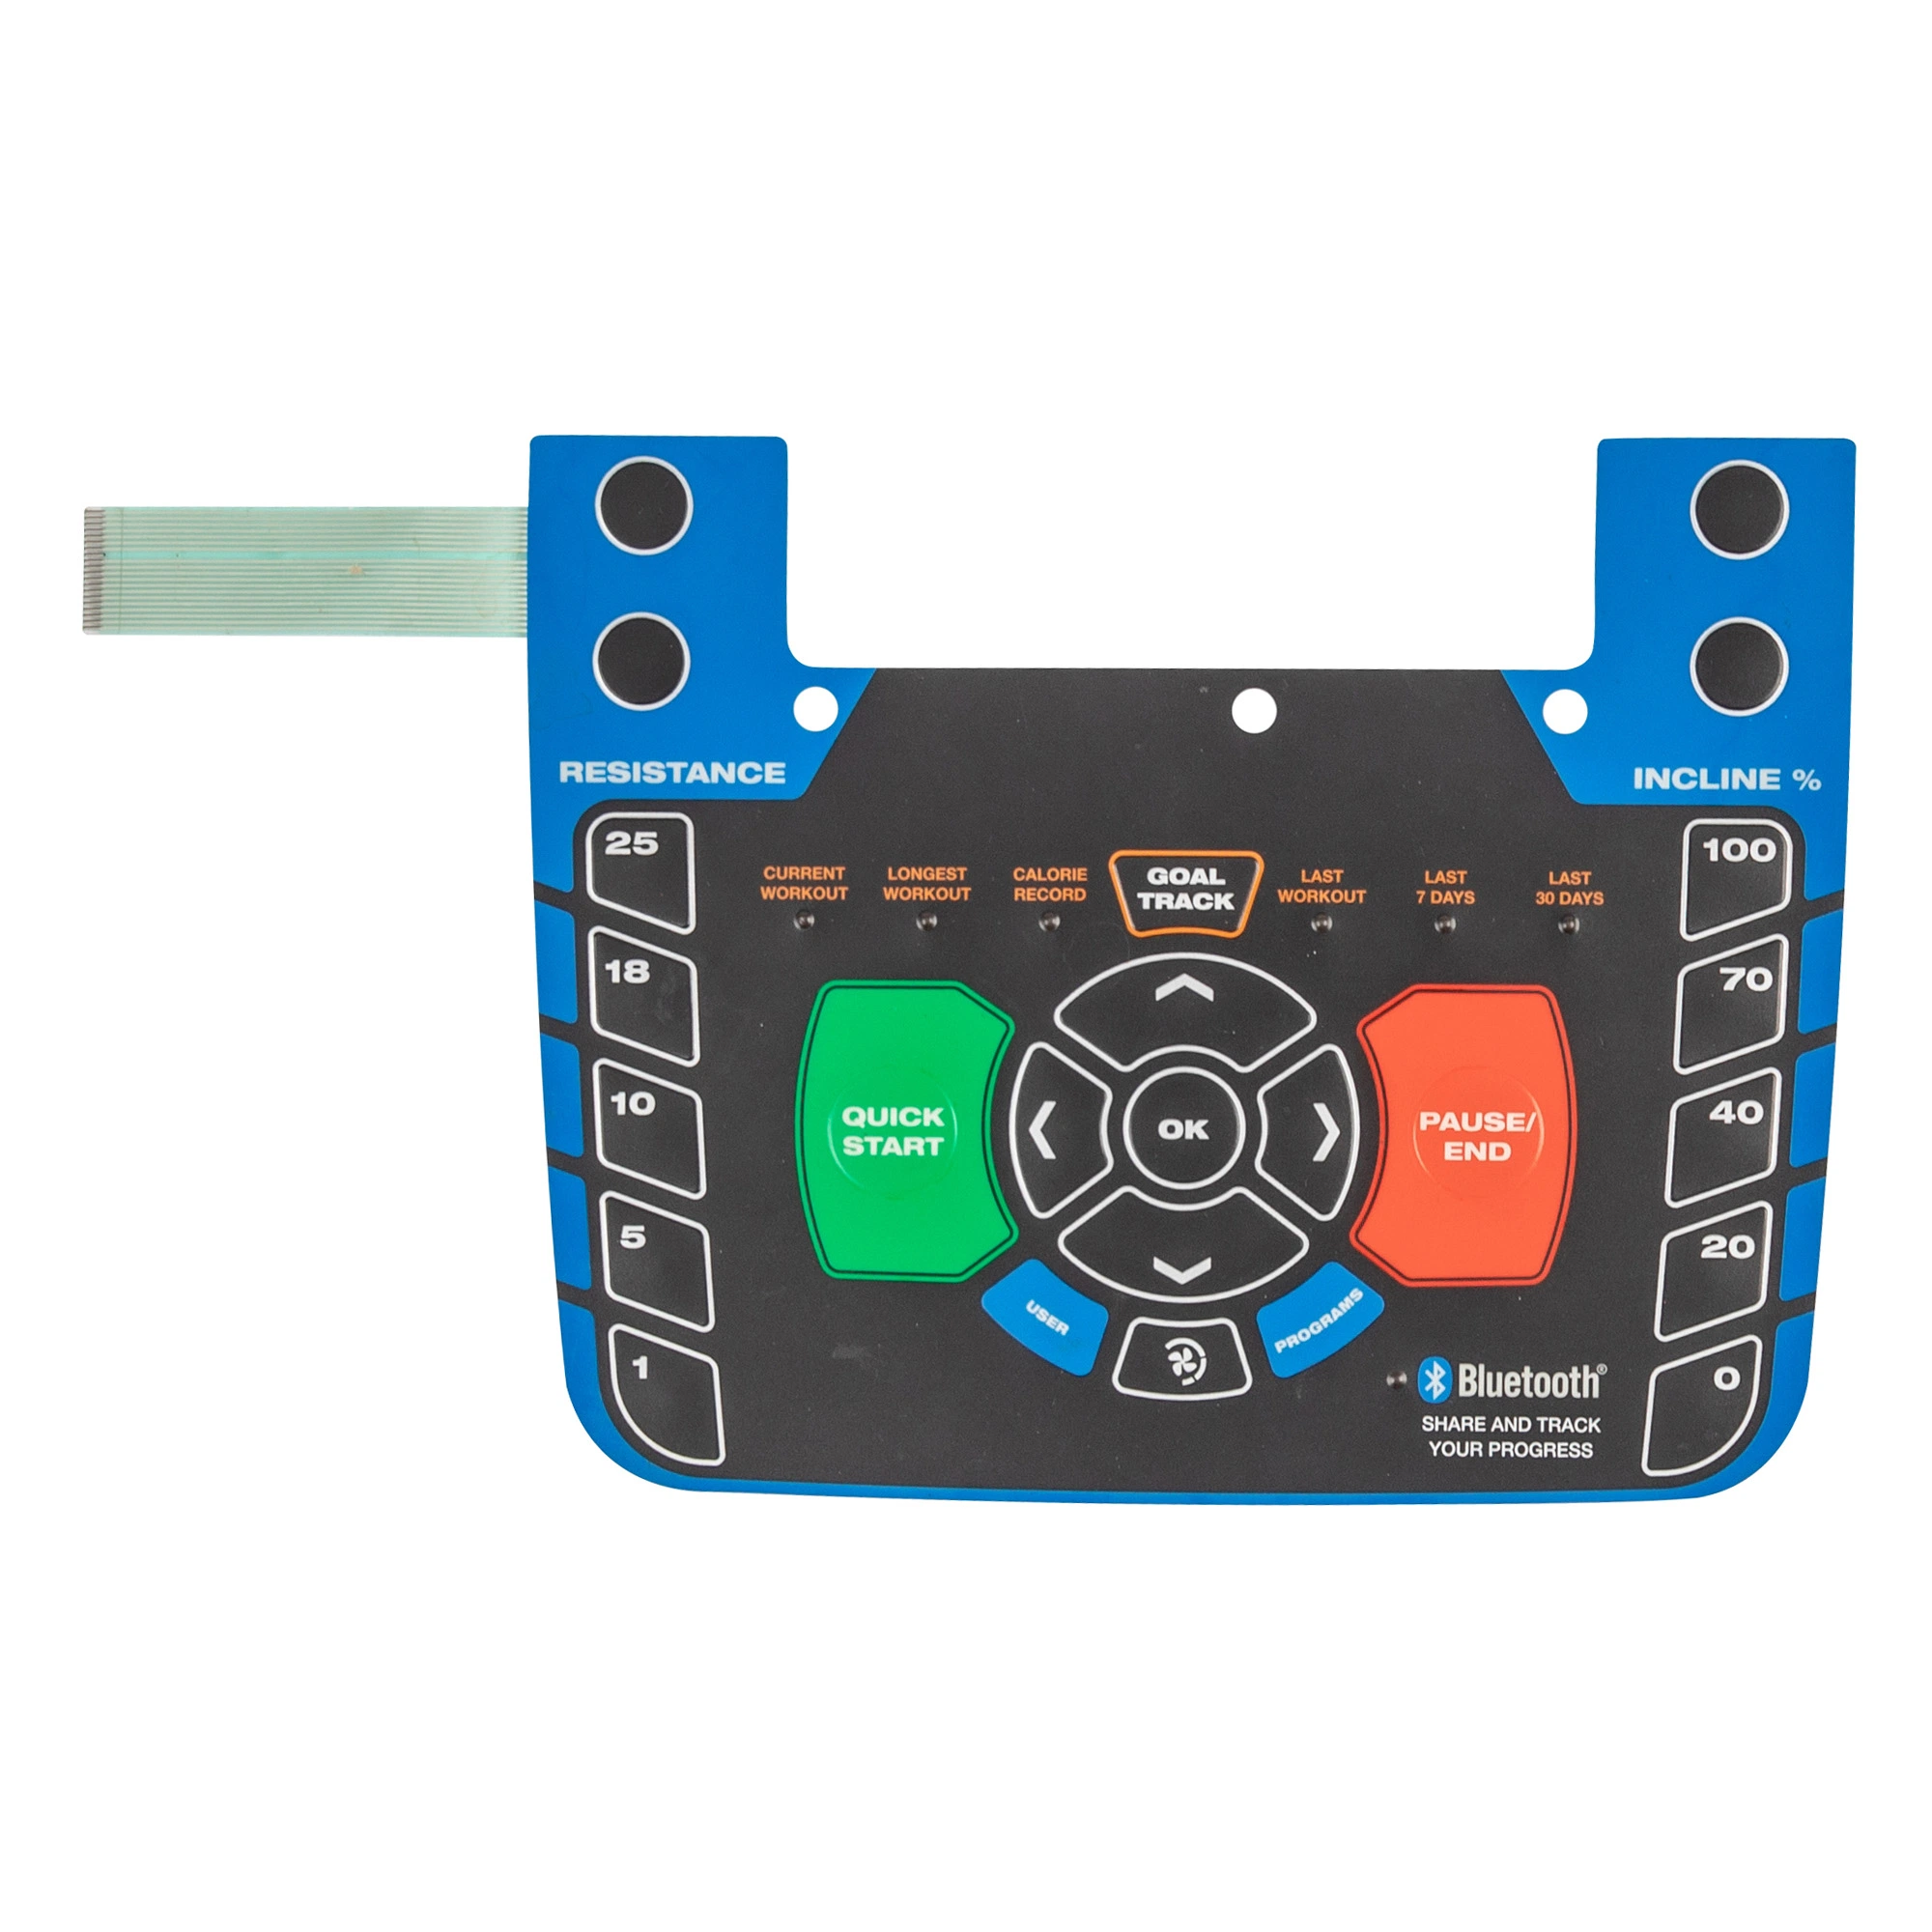 Custom Electronic Switch Folientastatur mit Grafik-Overlay